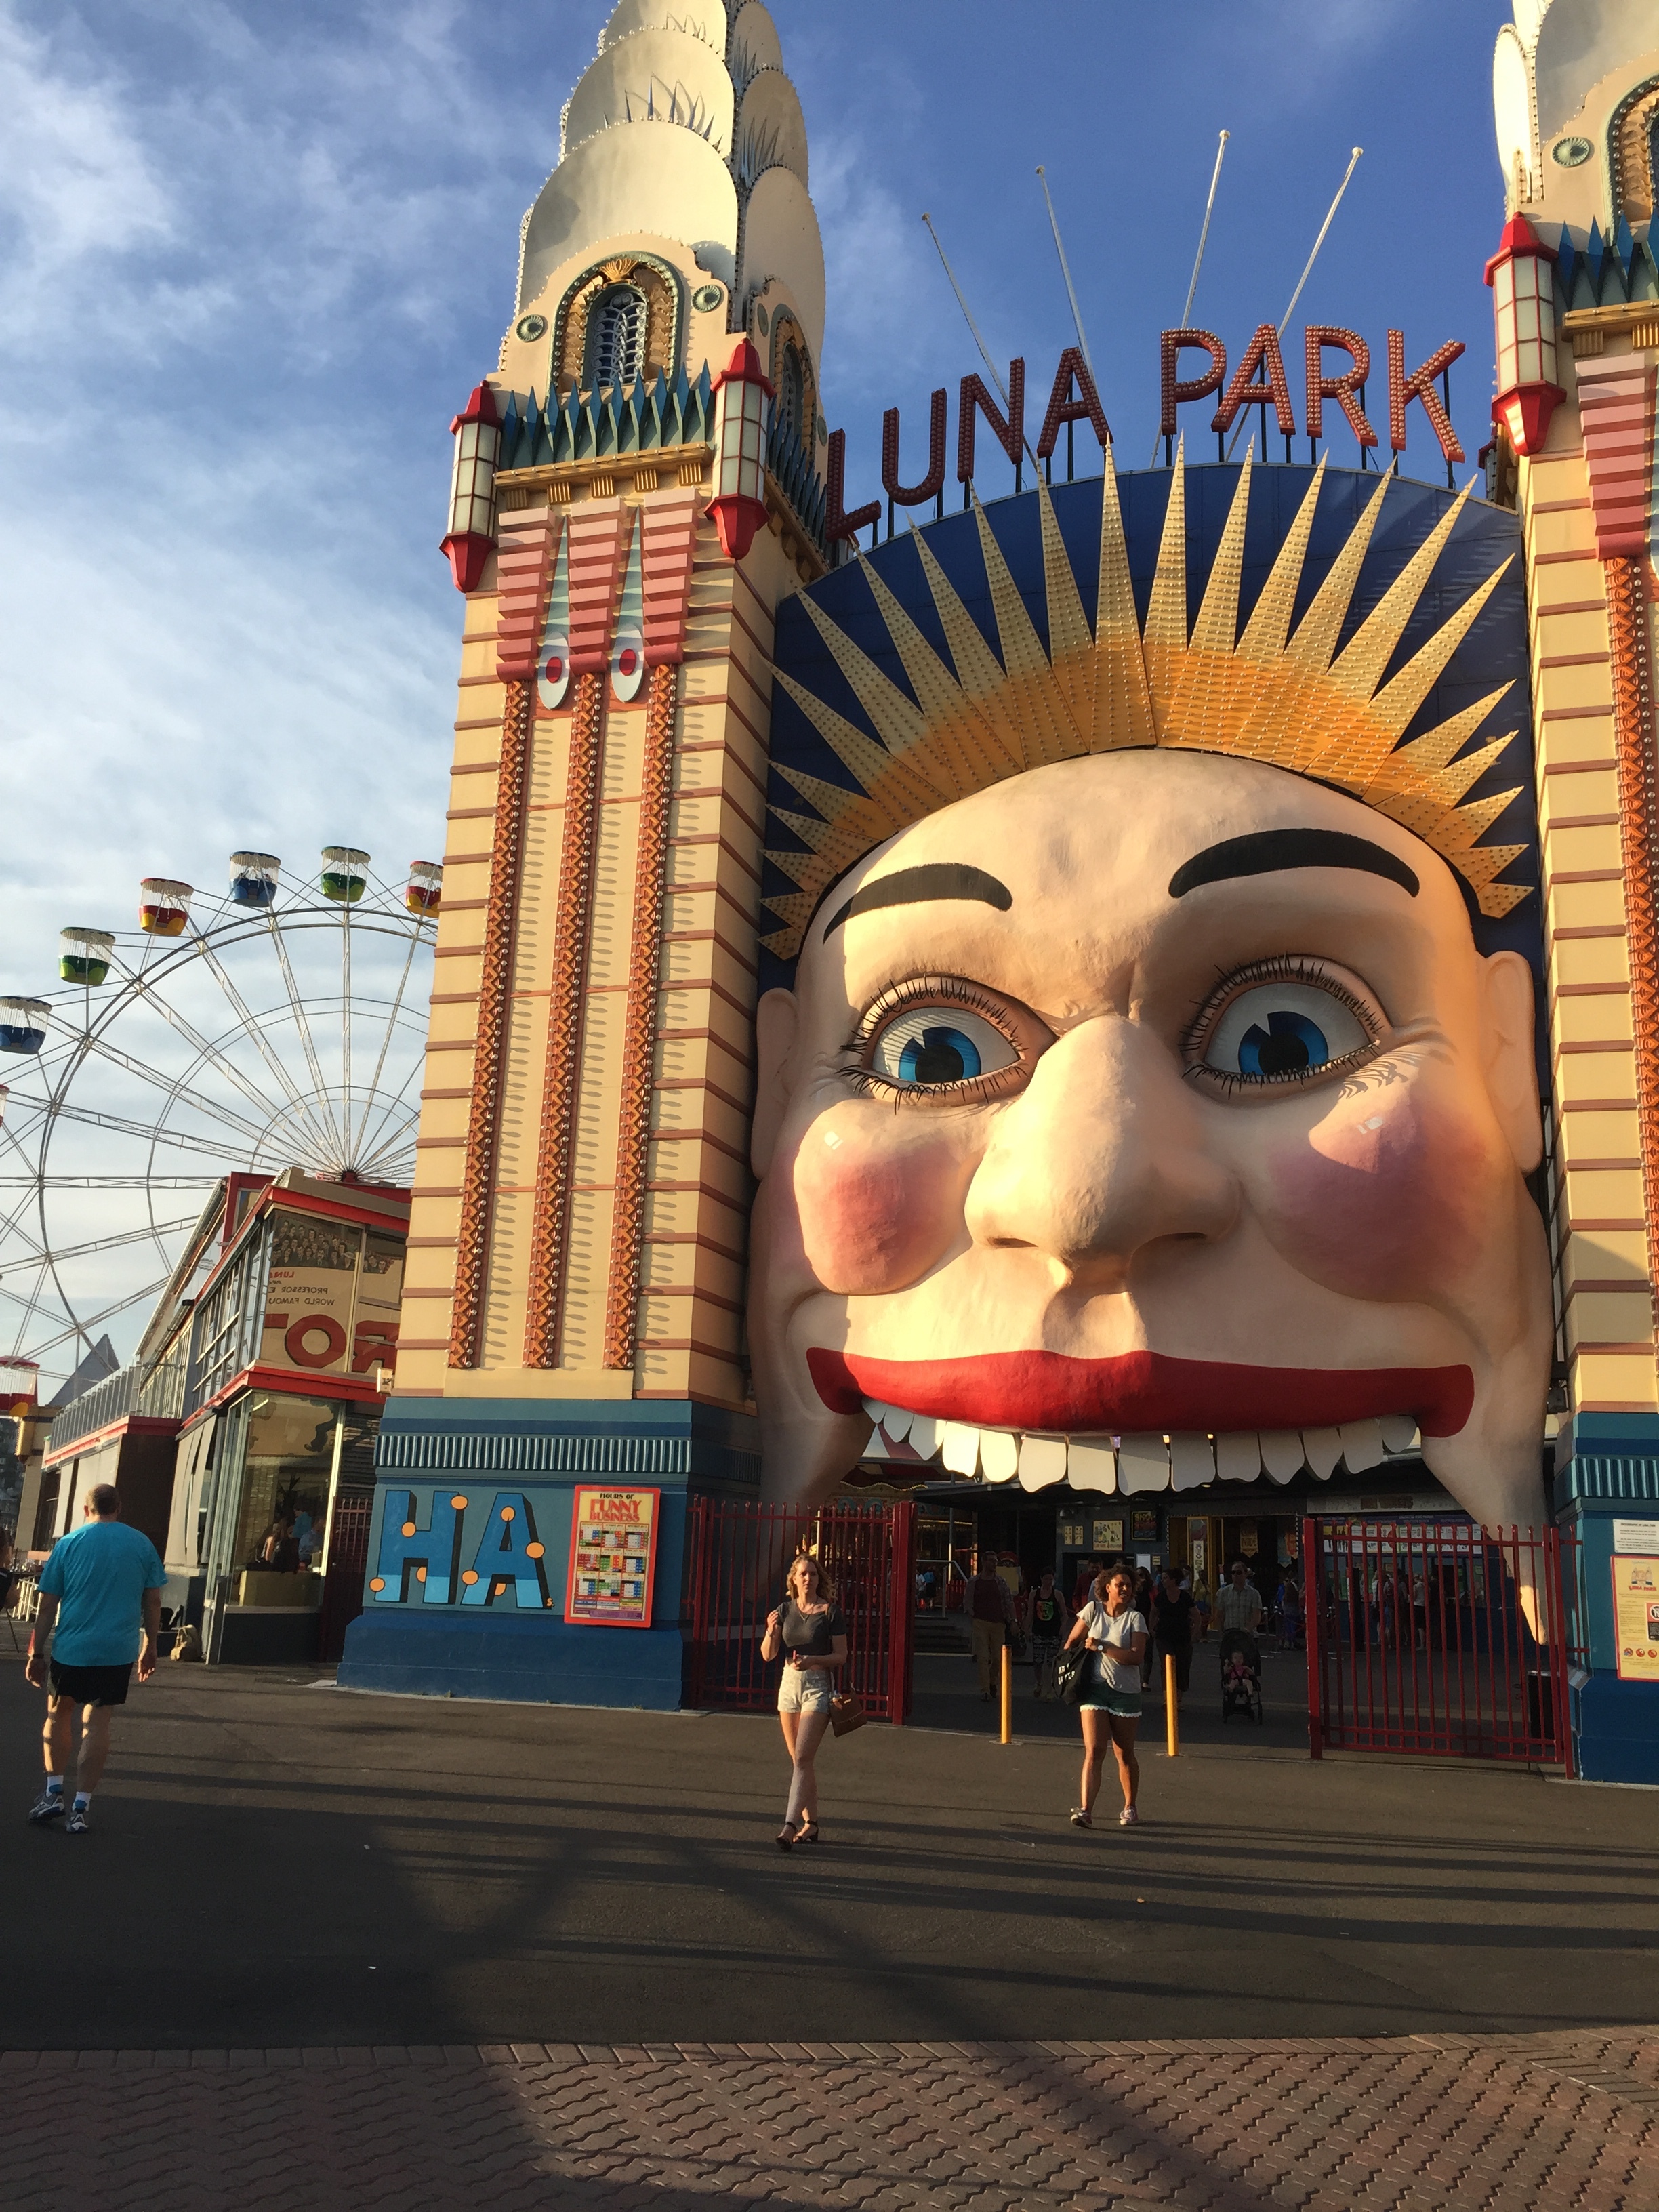 Luna Park in Sydney Australia